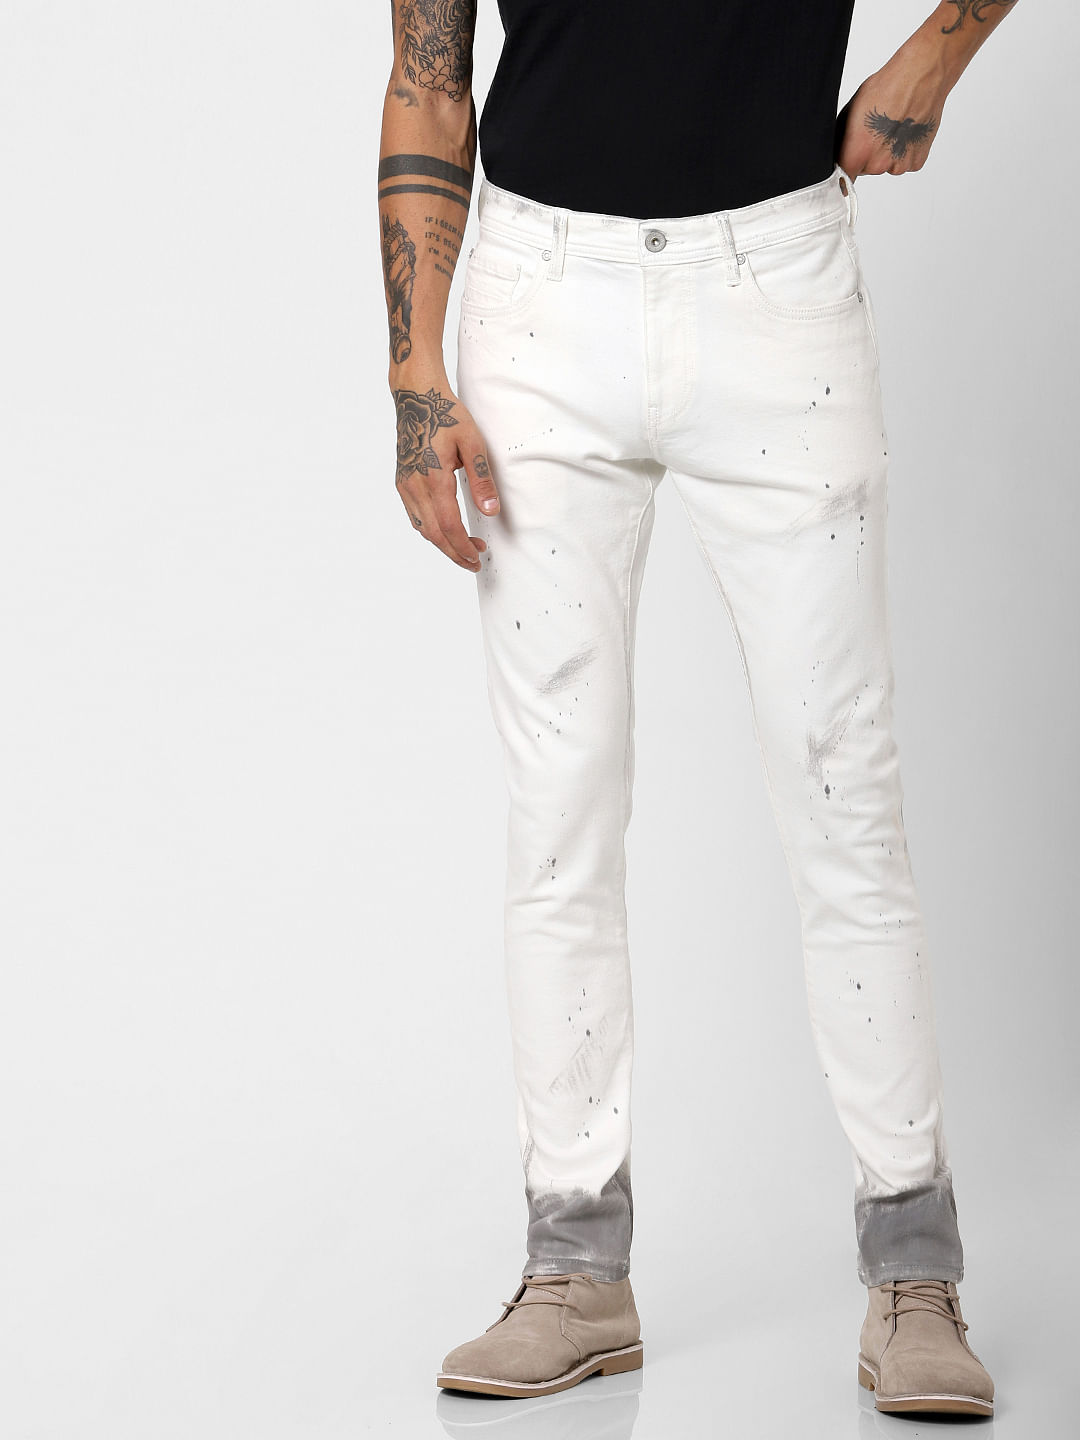 buy white jeans